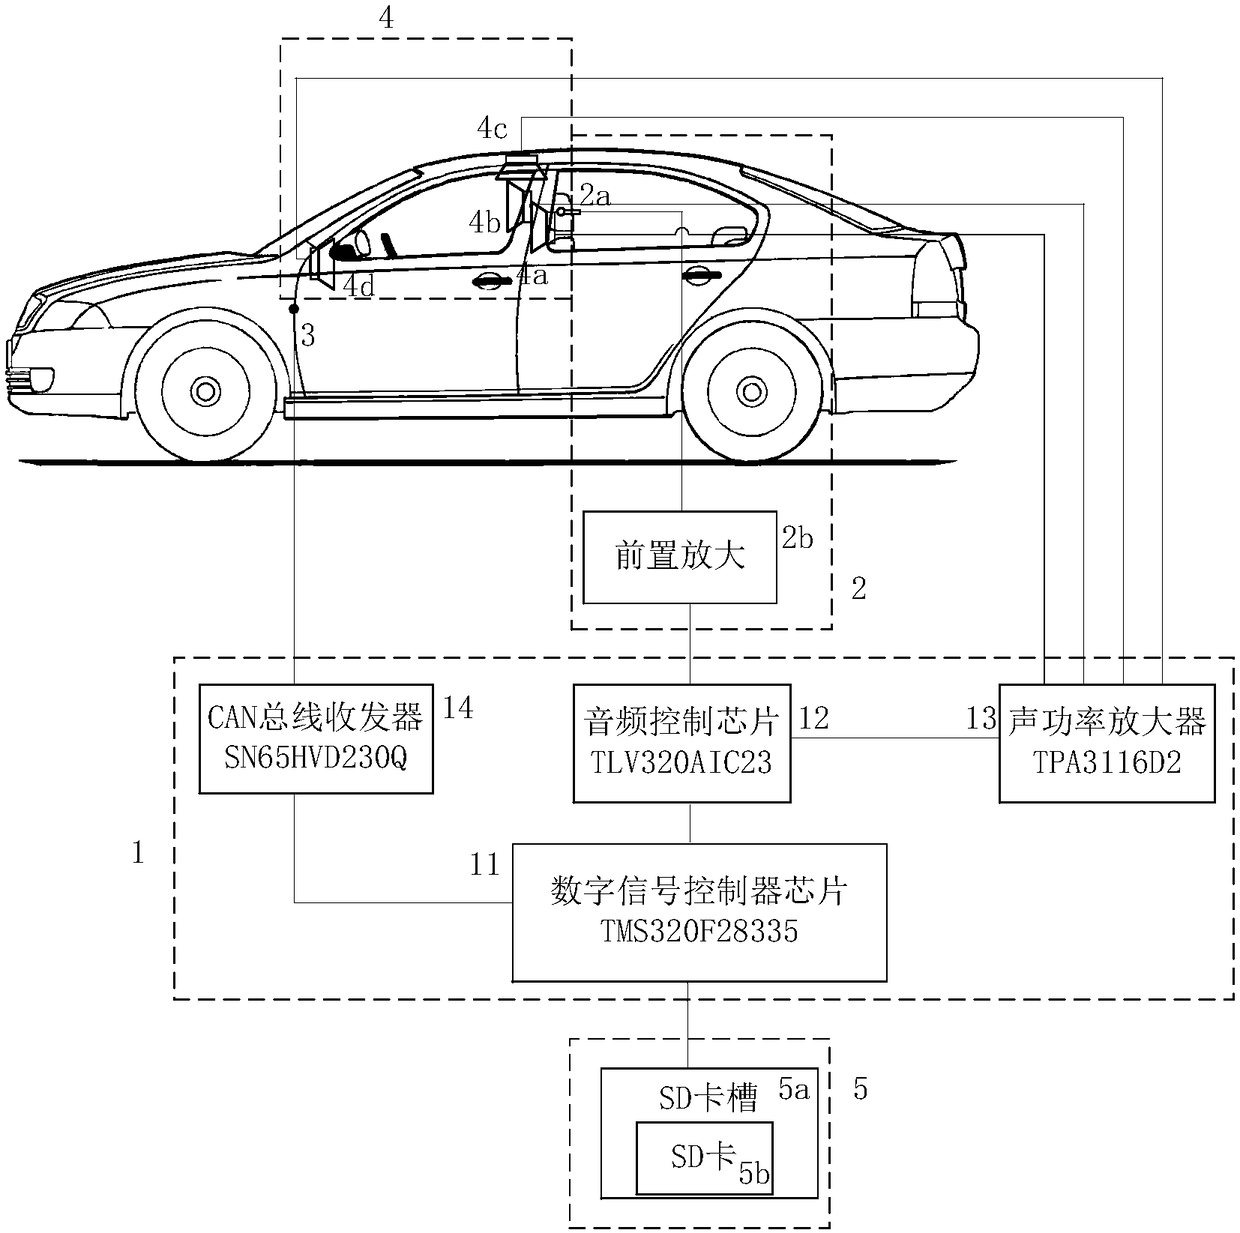 Vehicle-interior masking sound quality self-adaption control system and method